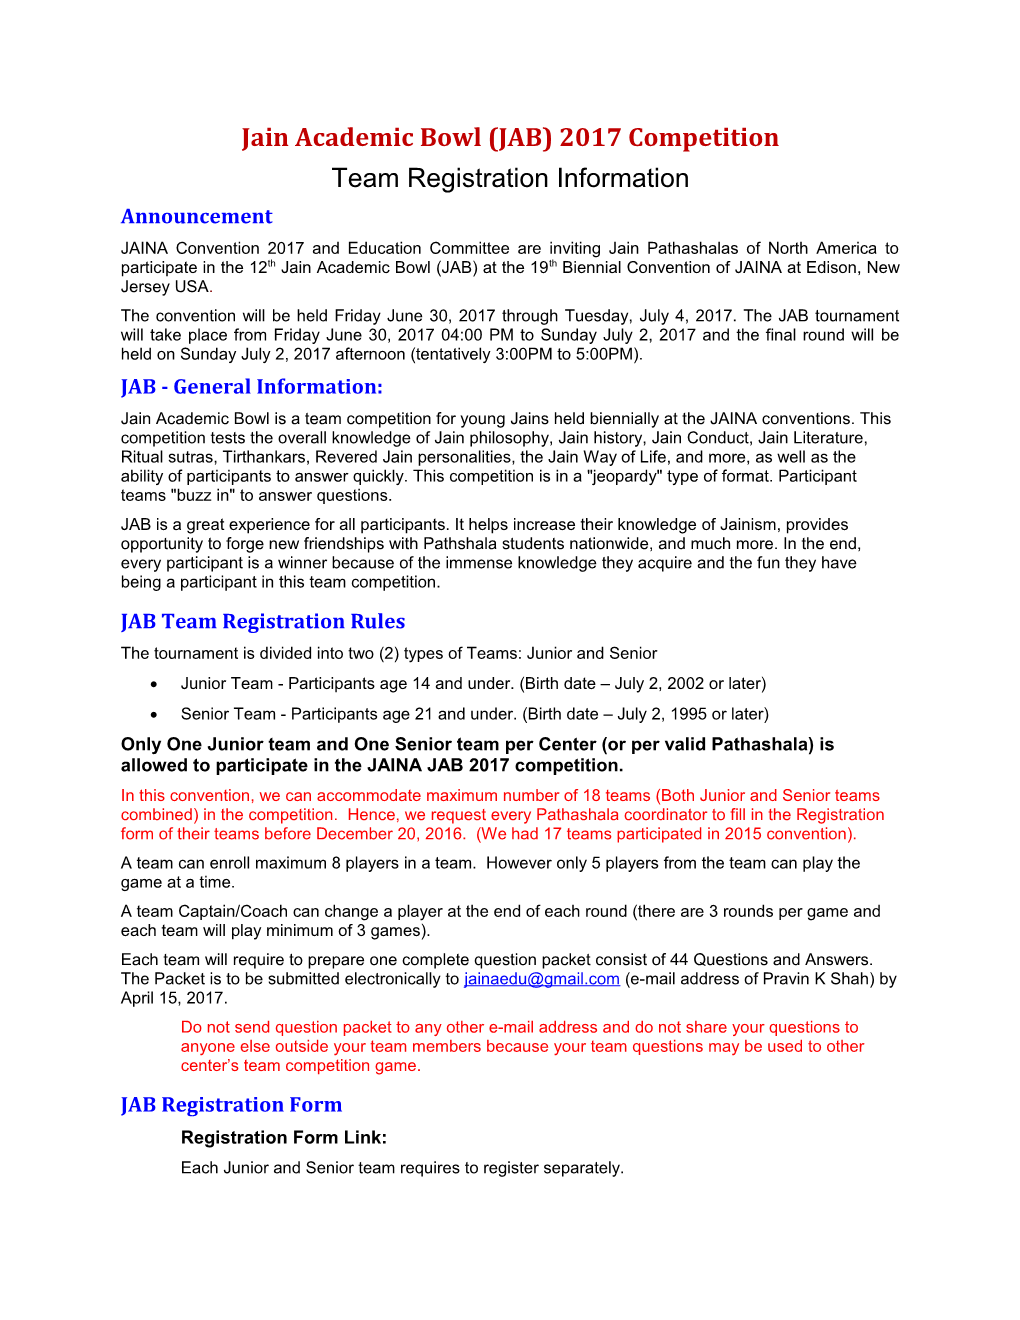 JAB Registration Information